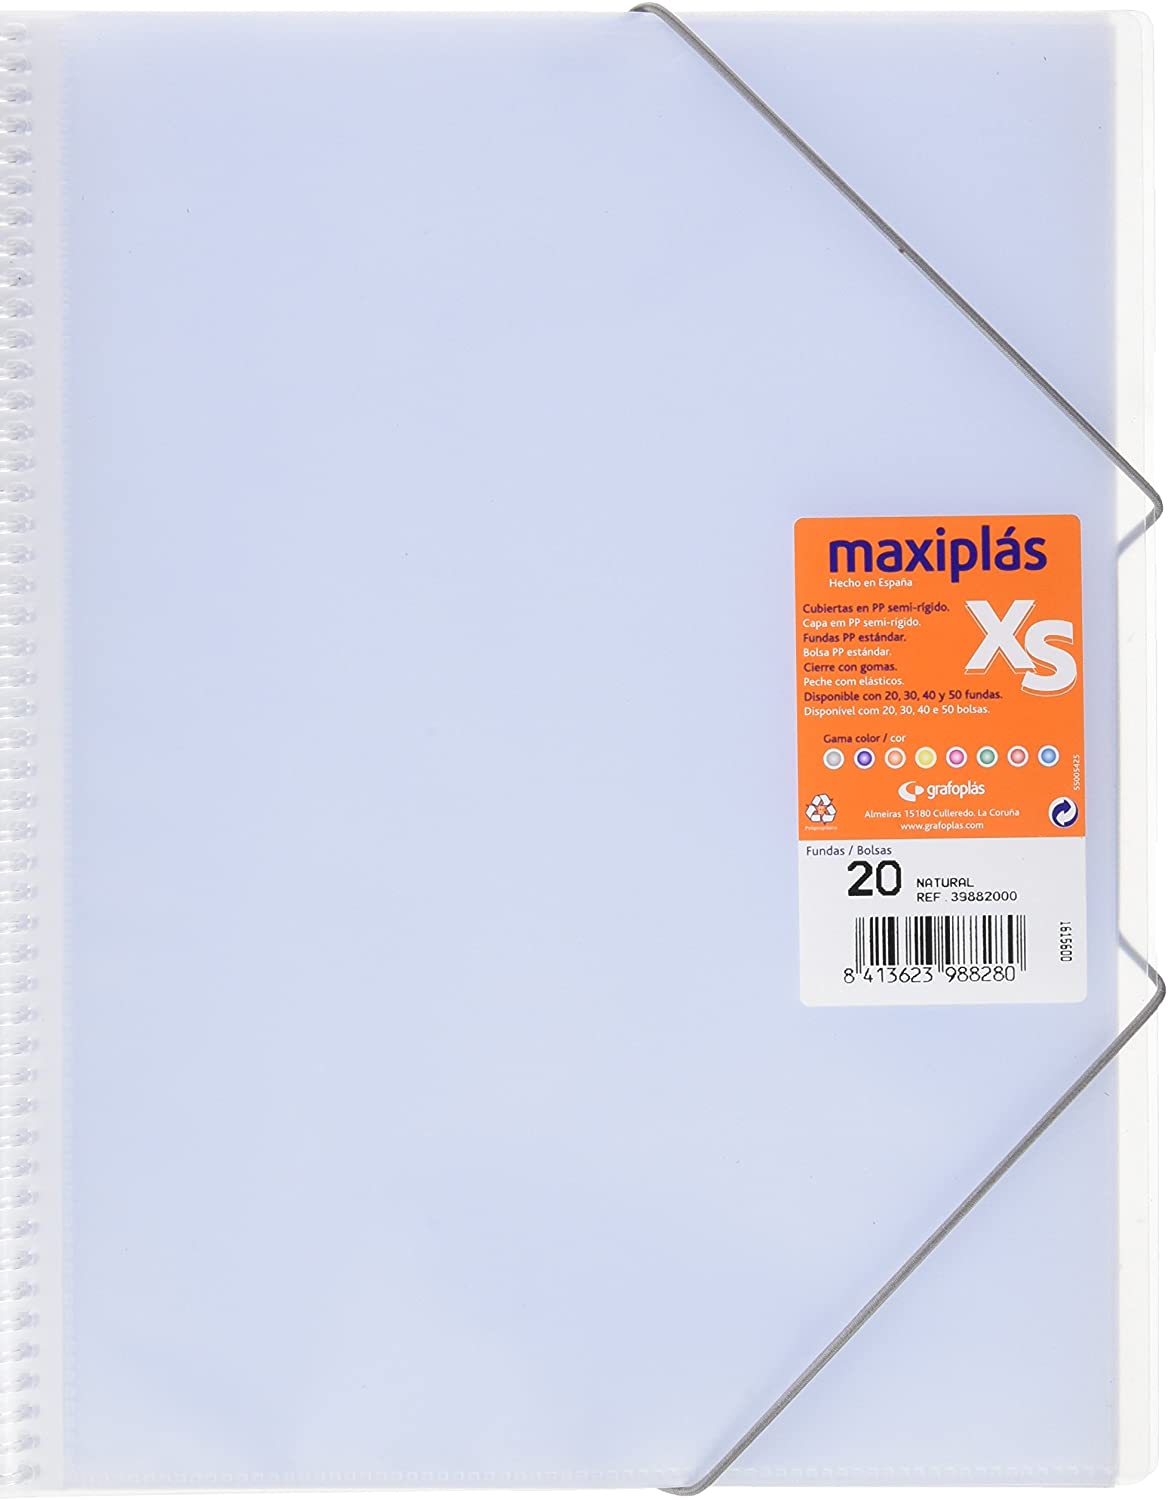 Carpeta grafoplas 20 fundas maxiplas transp. (39832000) 